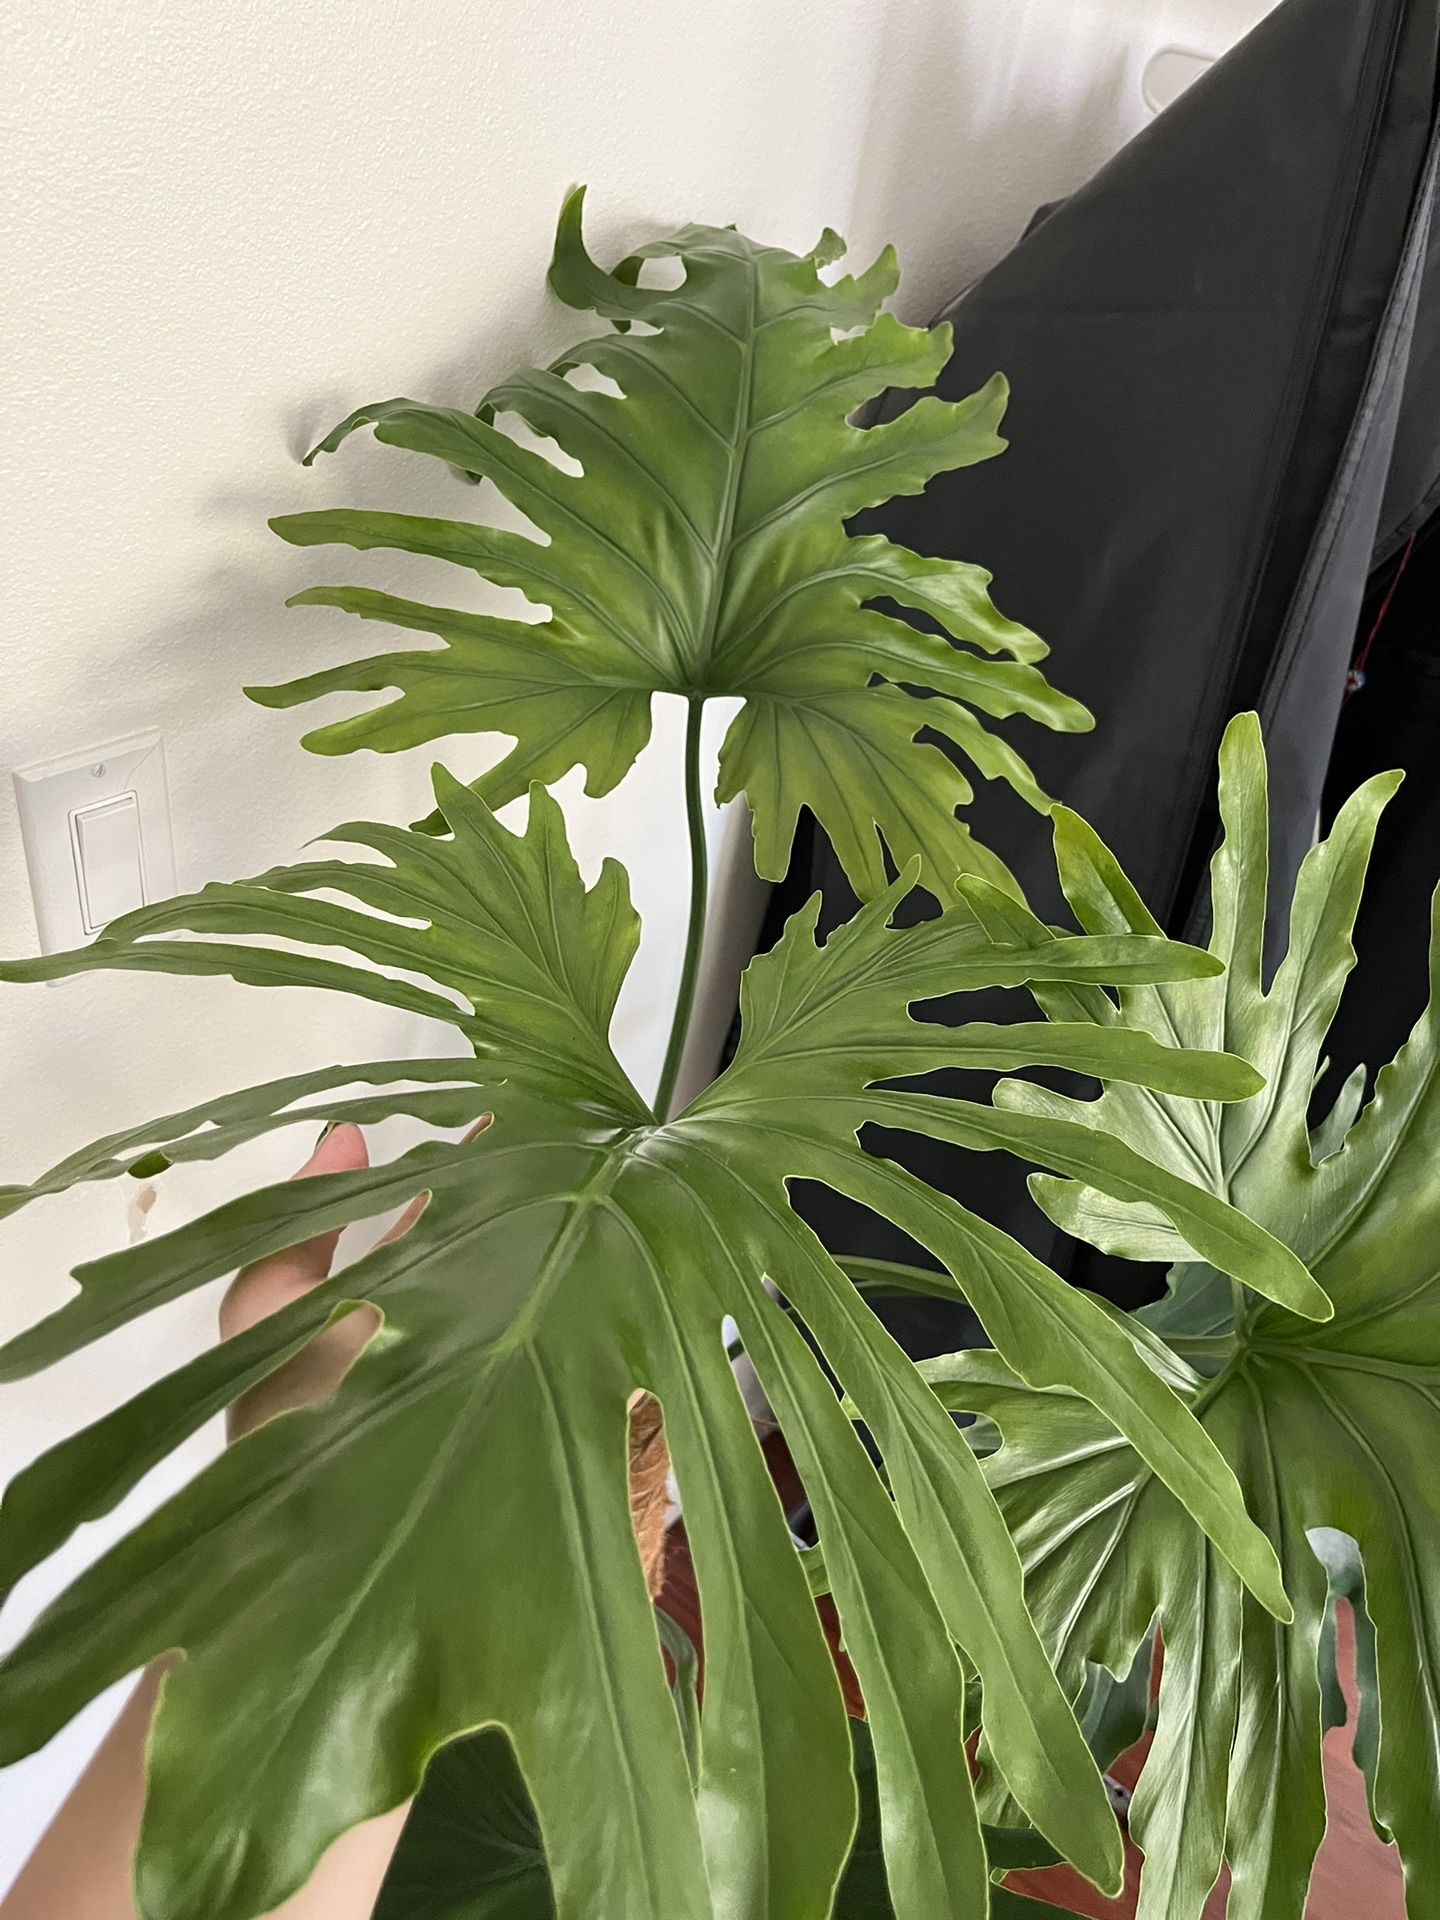 LARGE Philodendron Selloum “Hope” Plant In Terra Cotta Decorative Planter